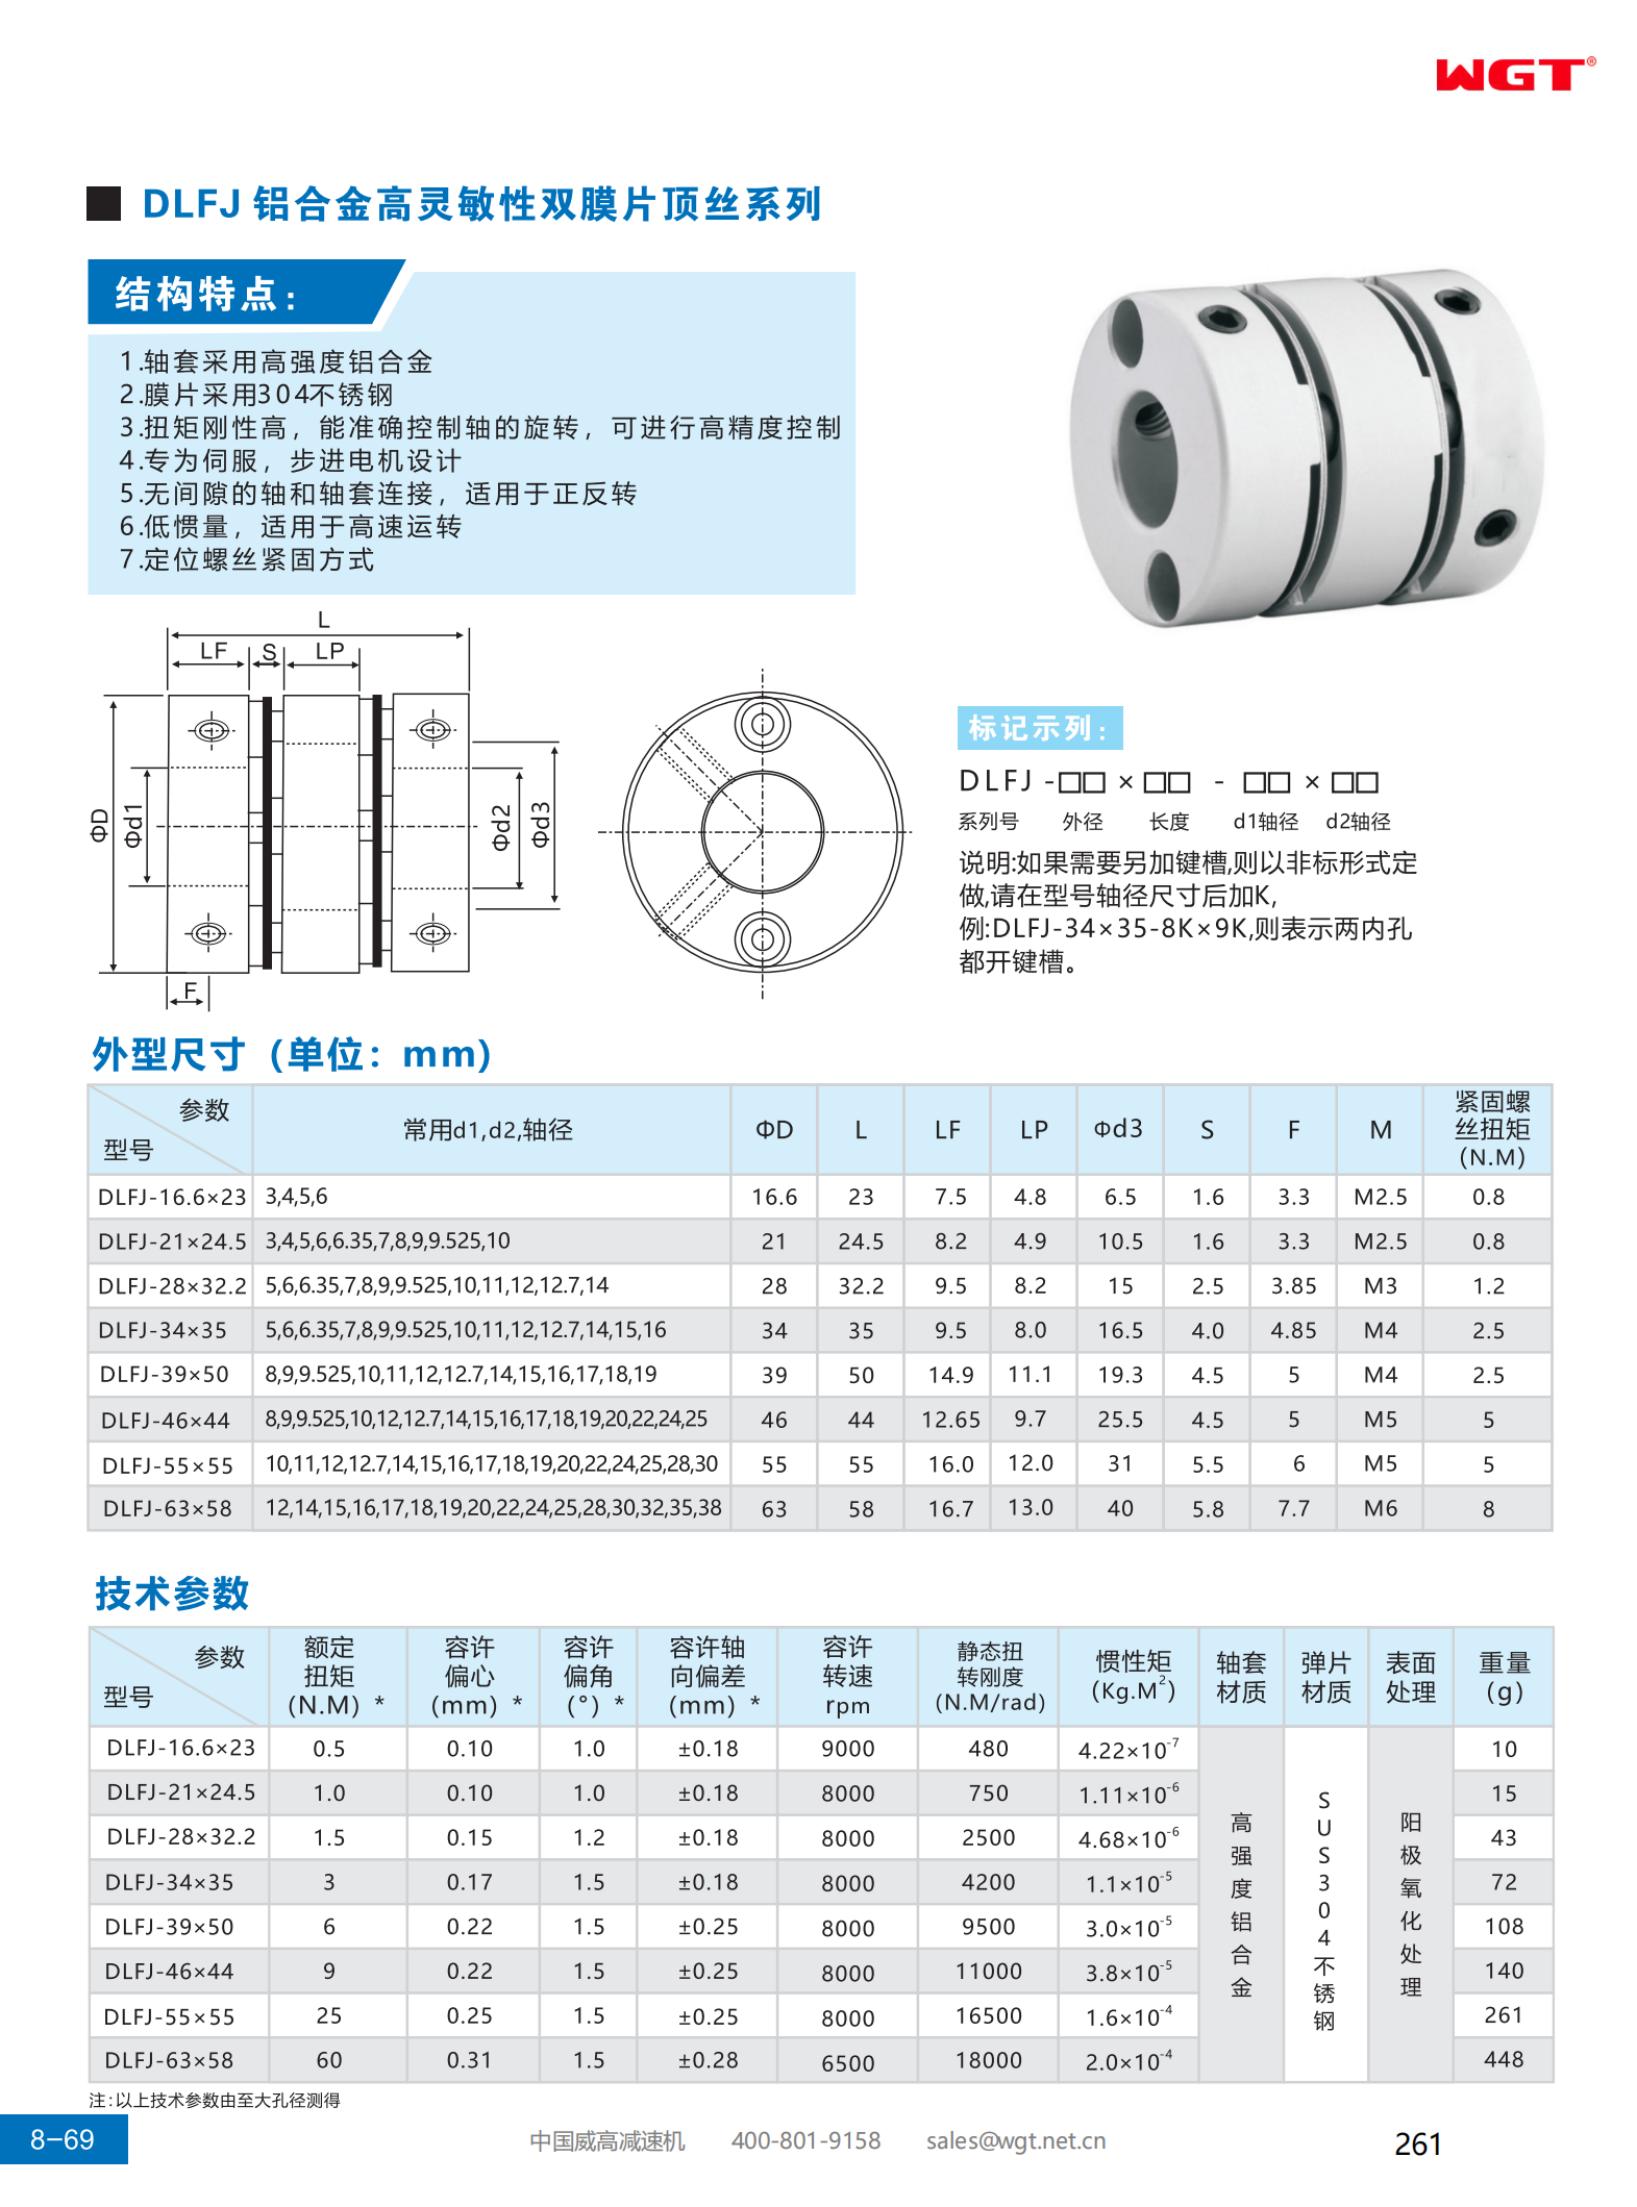 DLFJ aluminum alloy high sensitivity double diaphragm top wire series